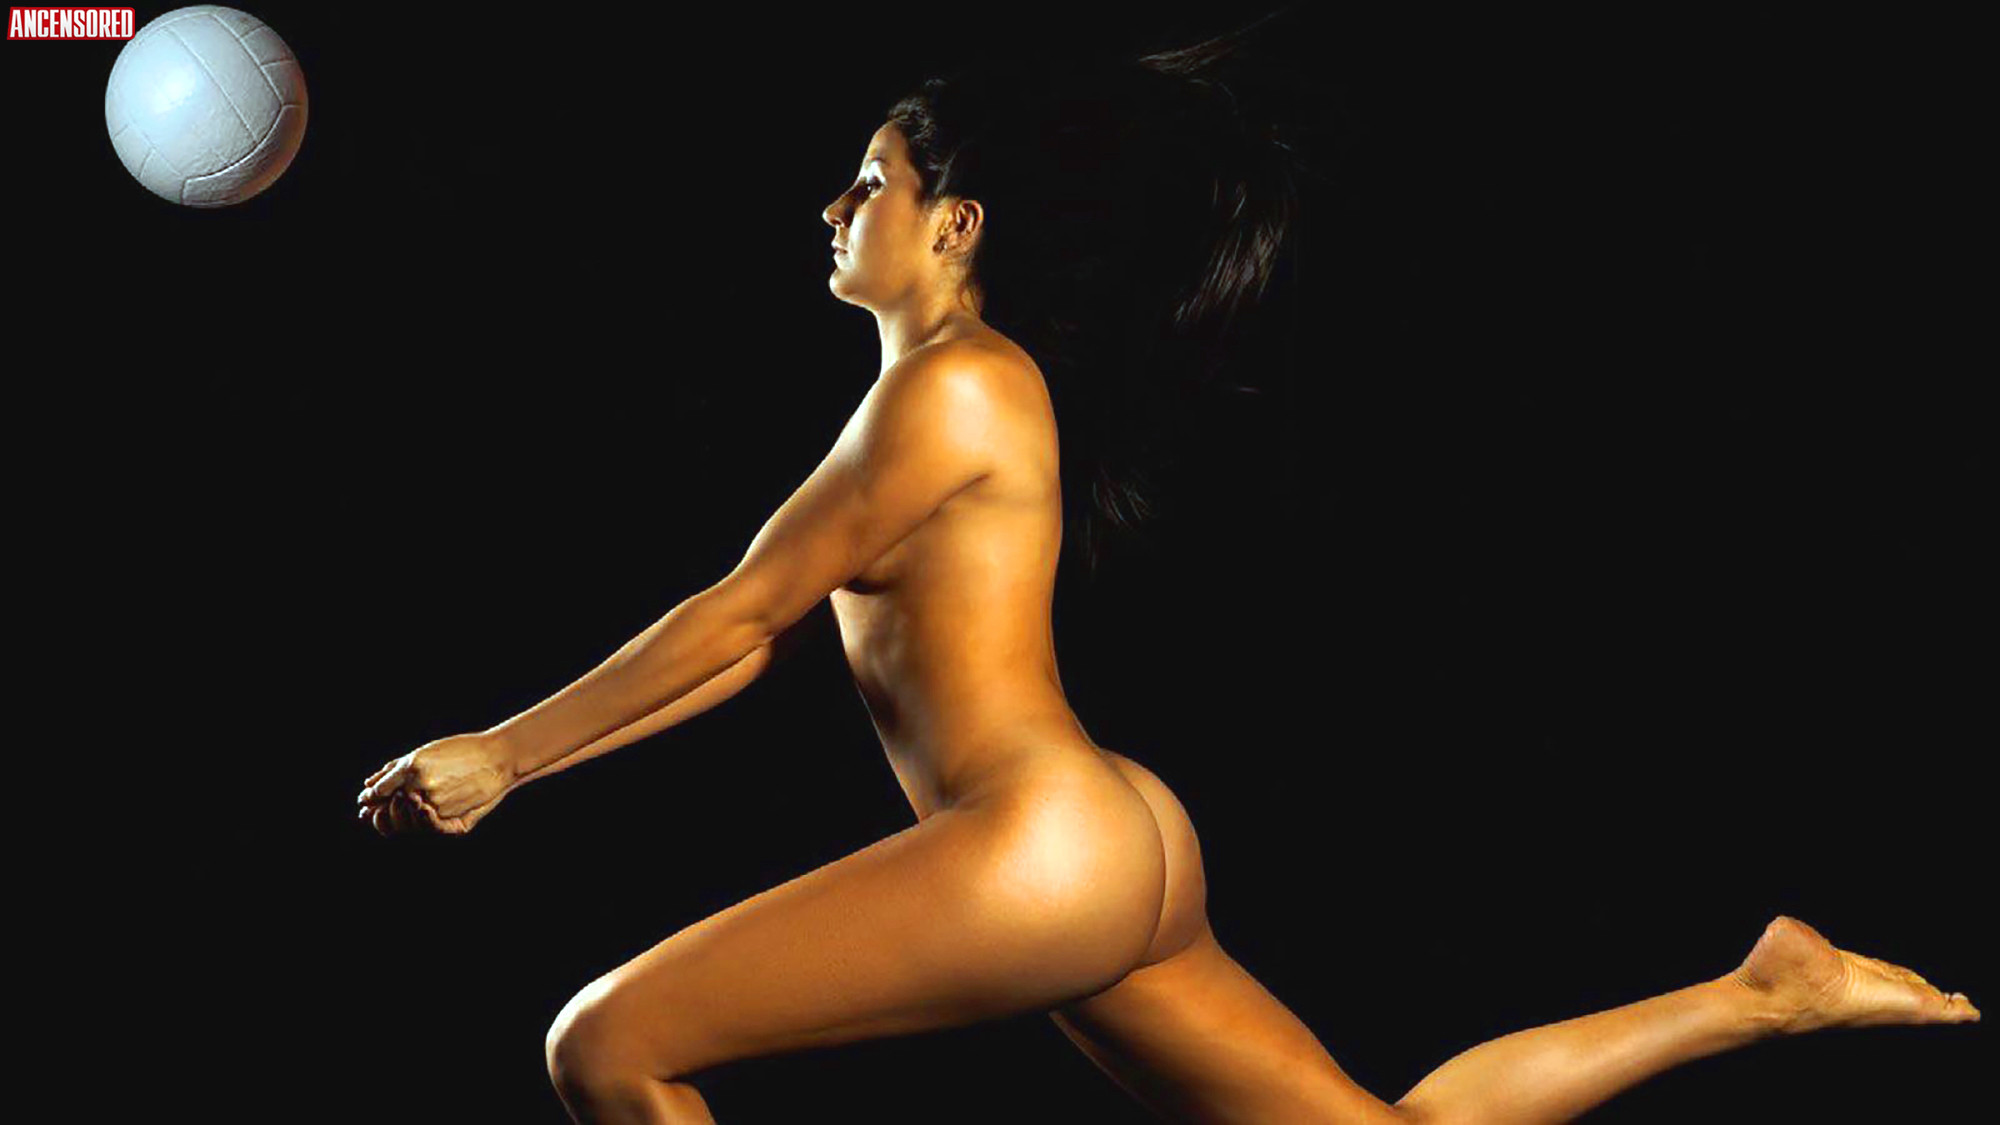 ESPN Body Issue (Latino) nude pics.